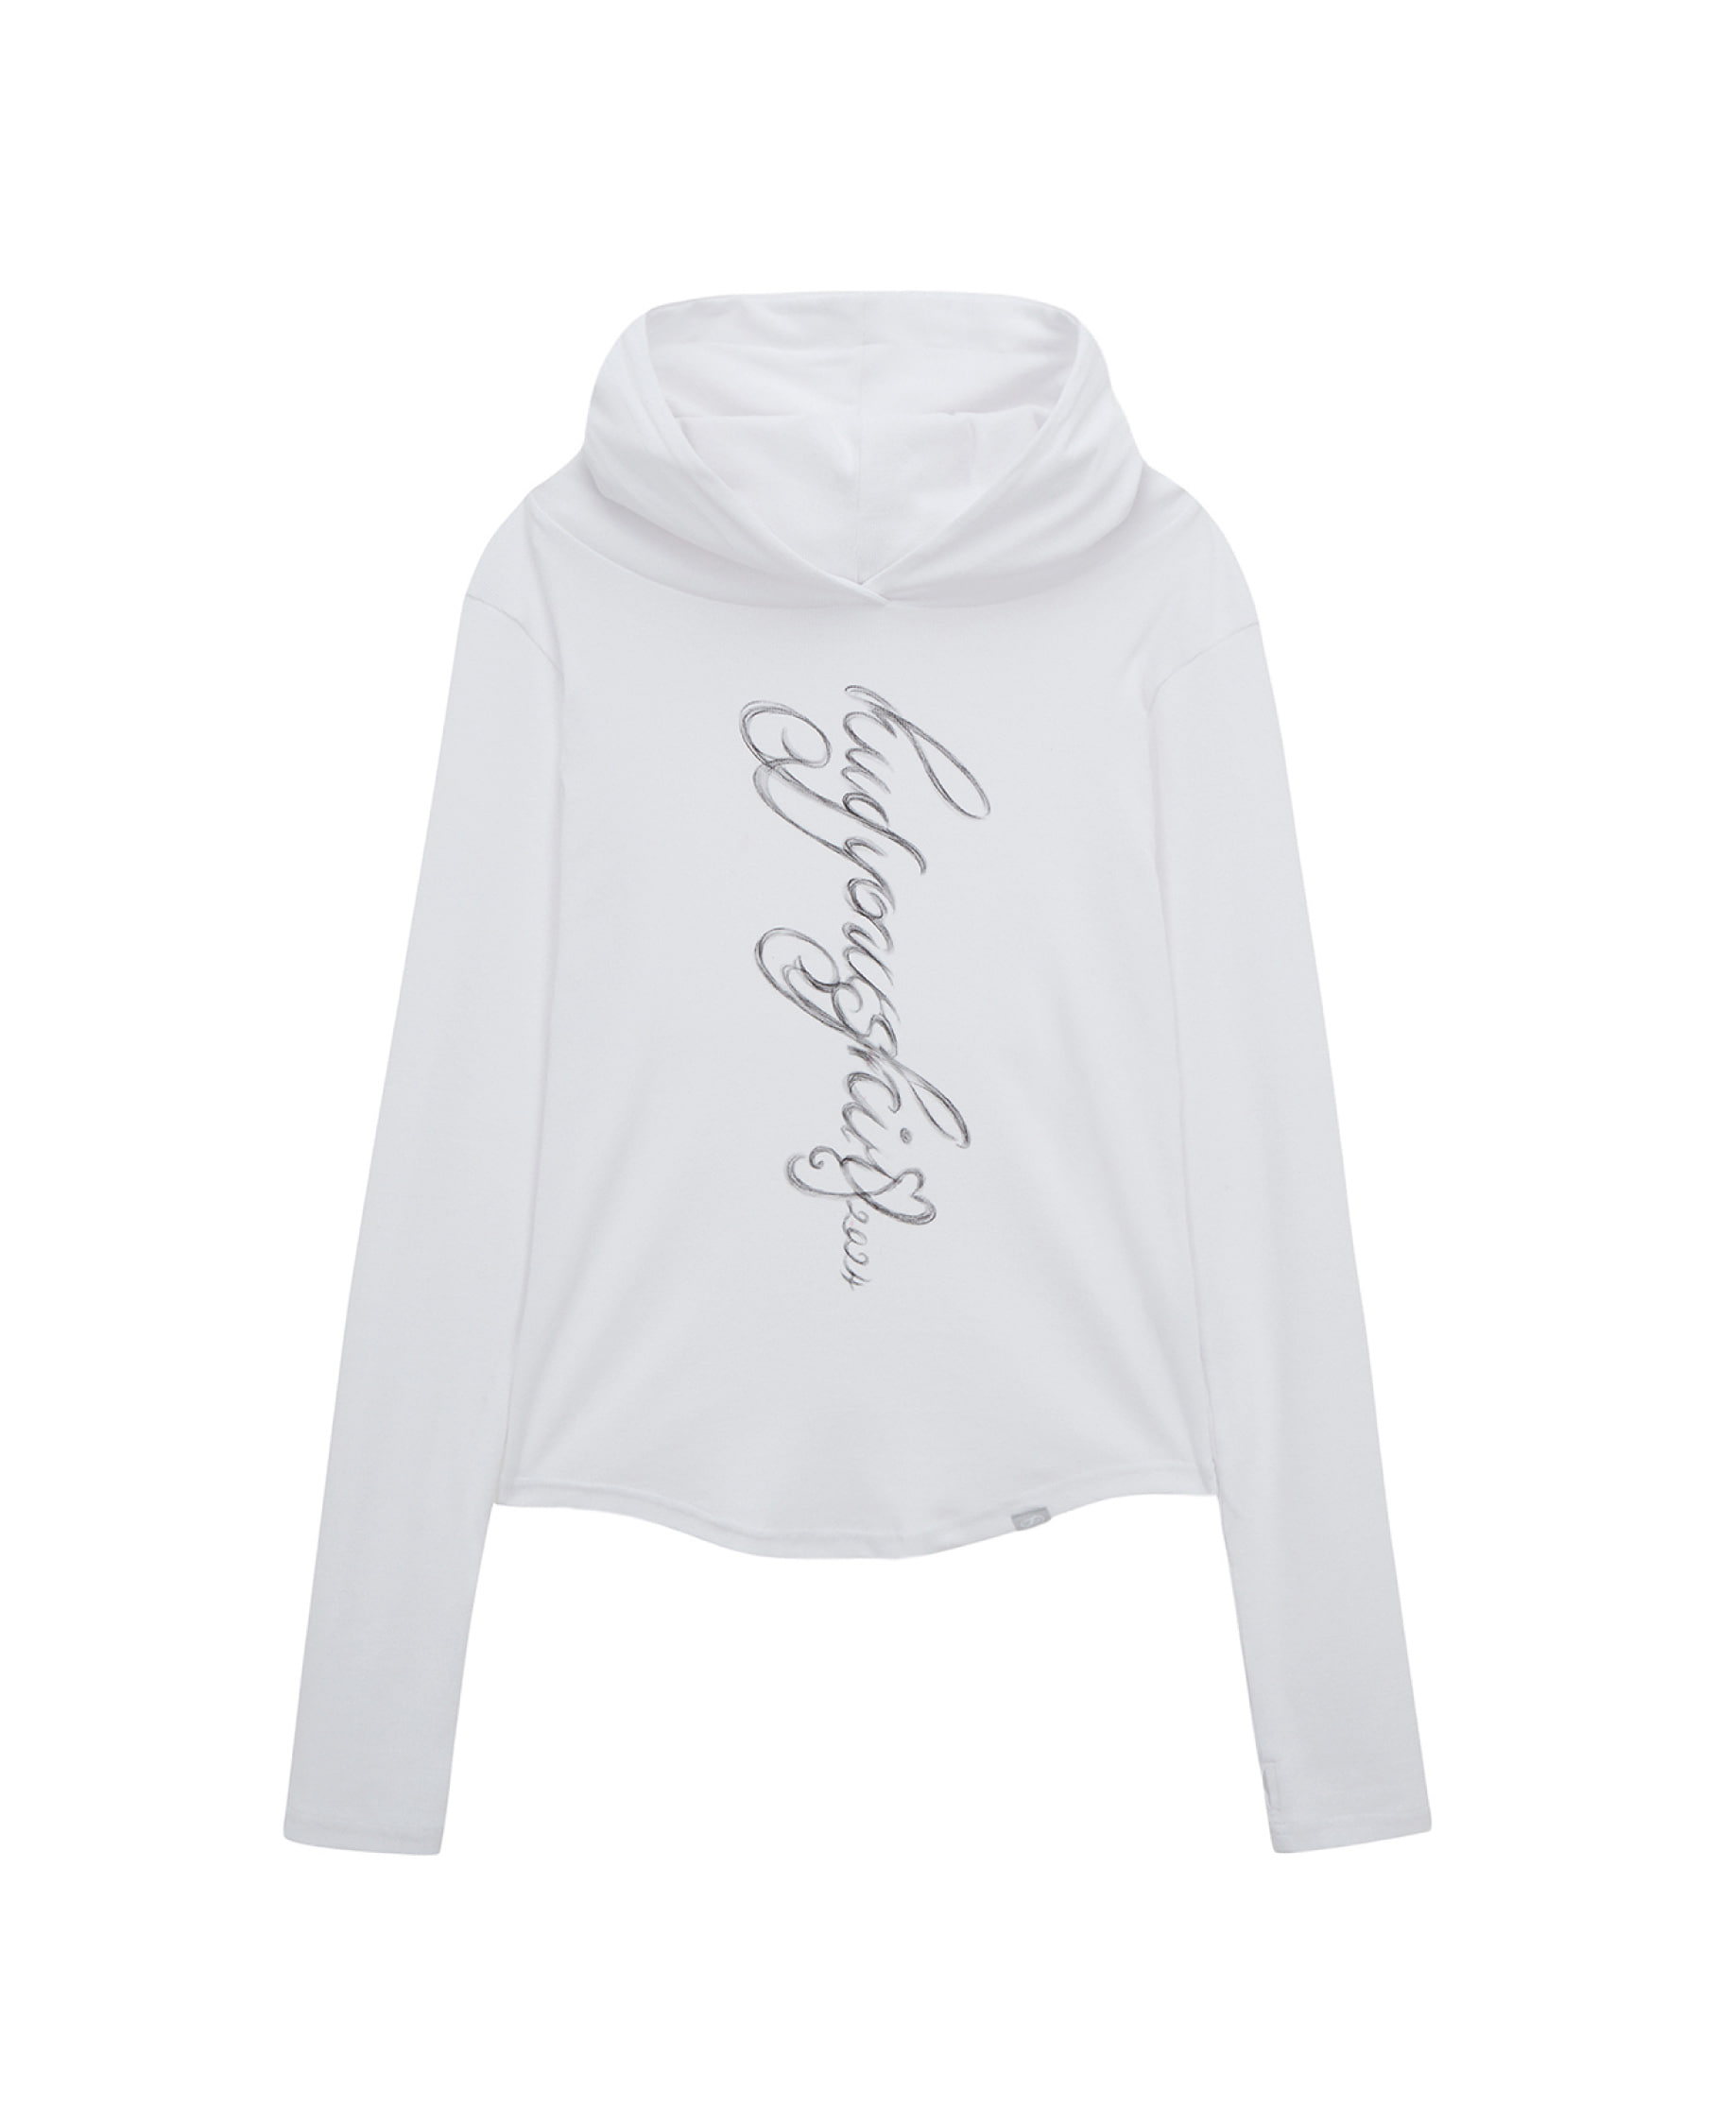 Lettering hoodie top (white)